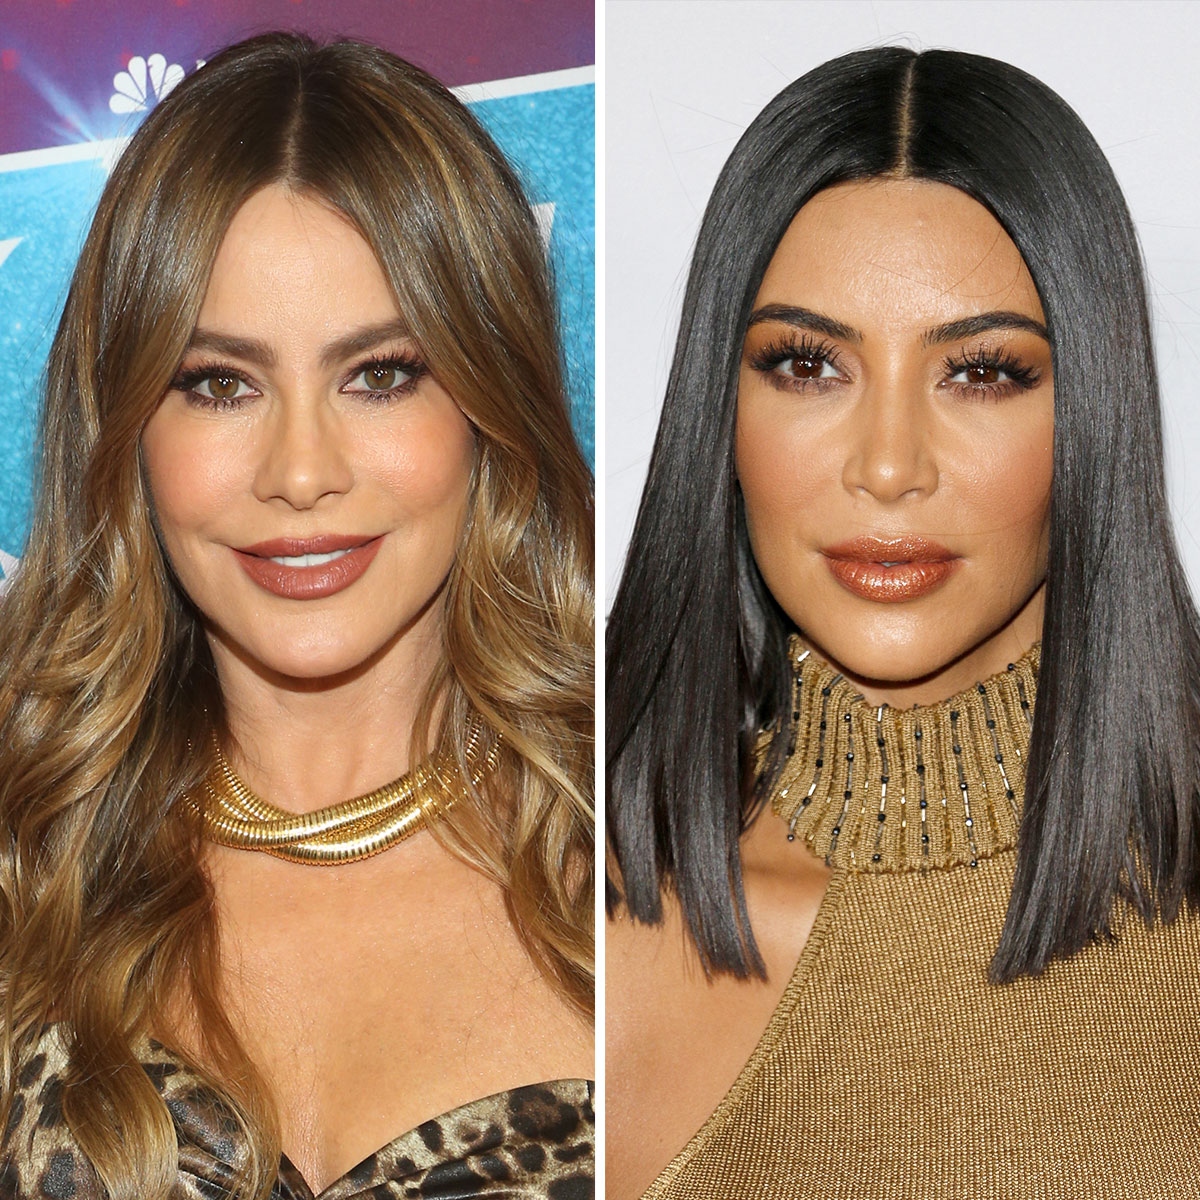 Fans Say Kim Kardashian And Sofia Vergara Were Caught Distorting